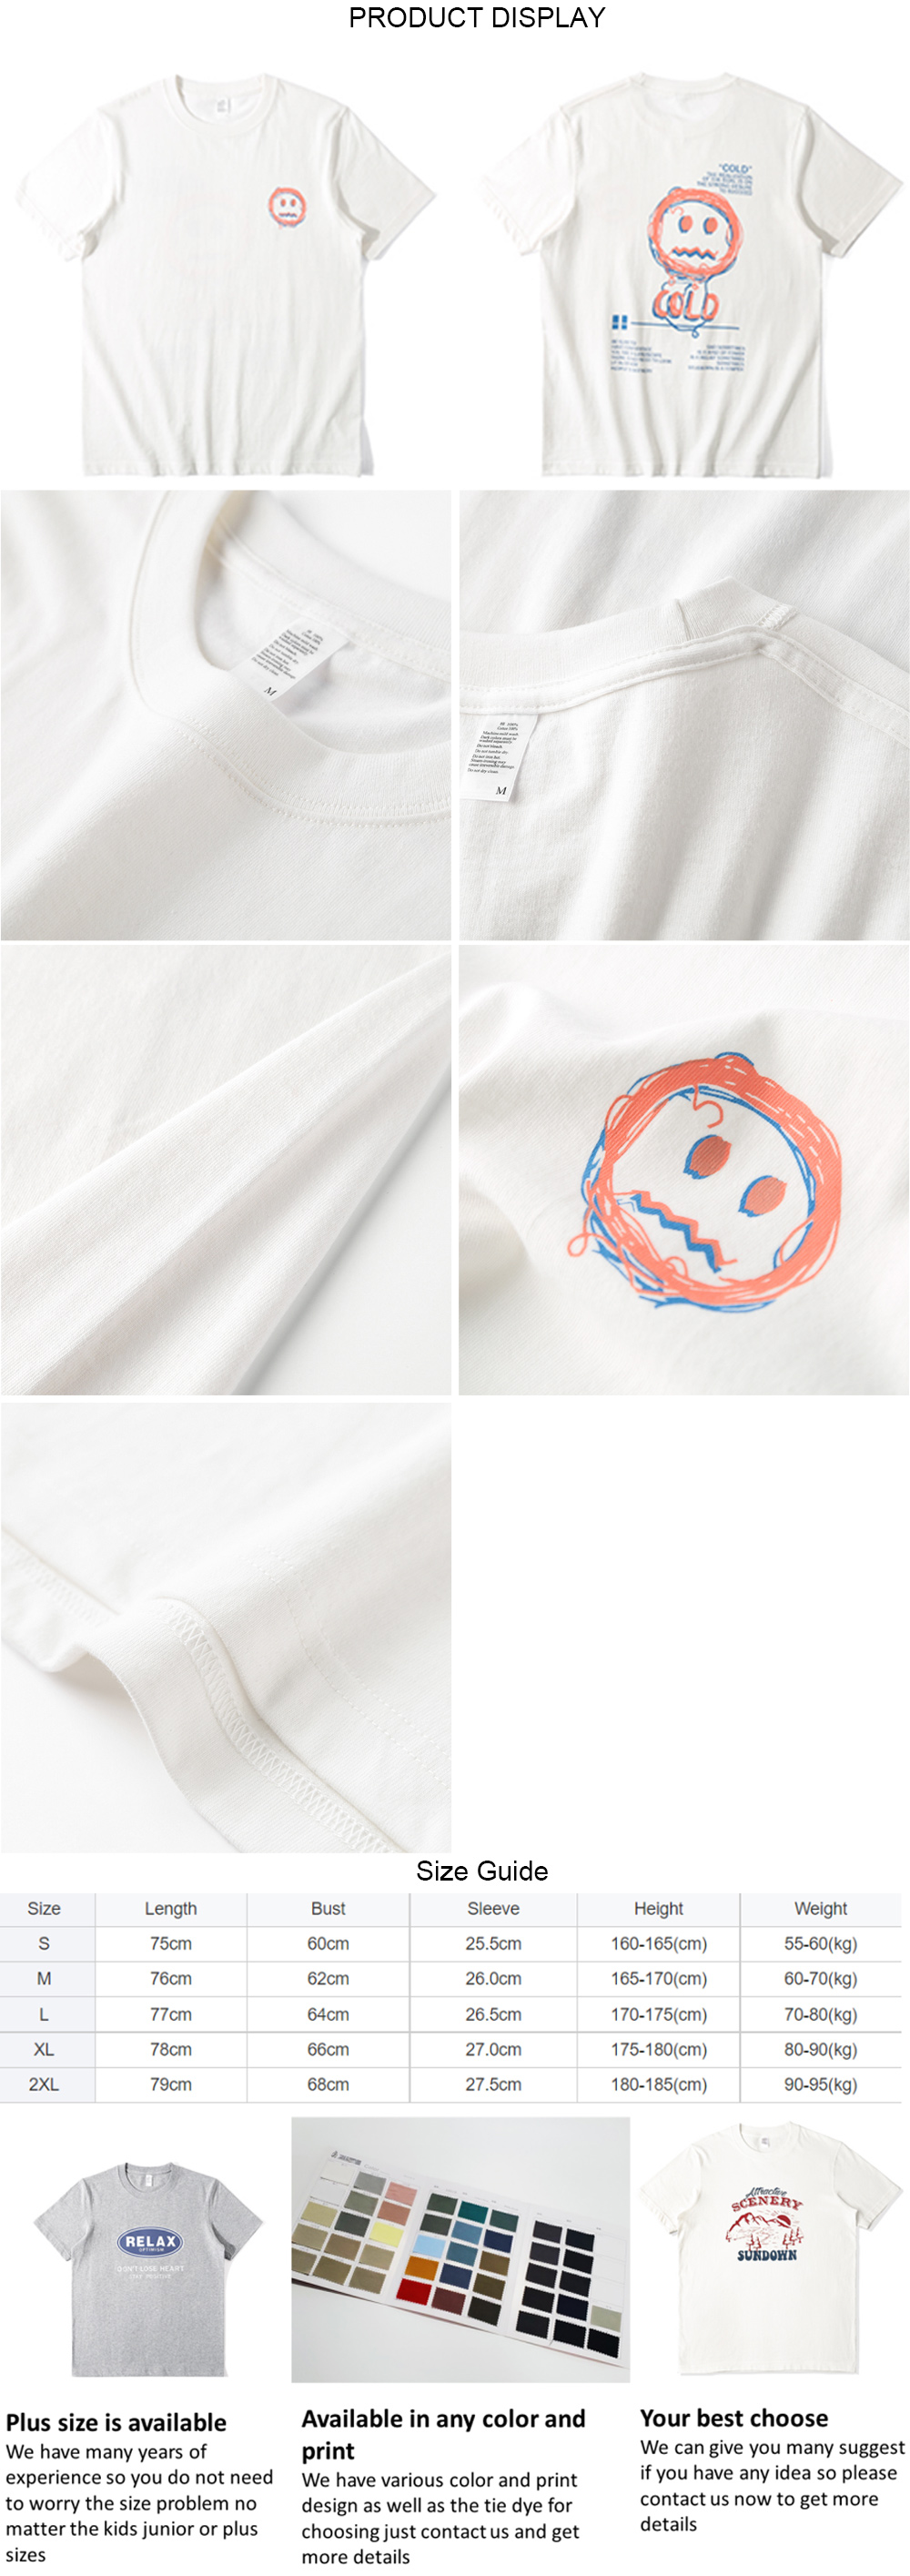  custom printing short sleeve 100% cotton sport cartoon graphic vintage T-shirt